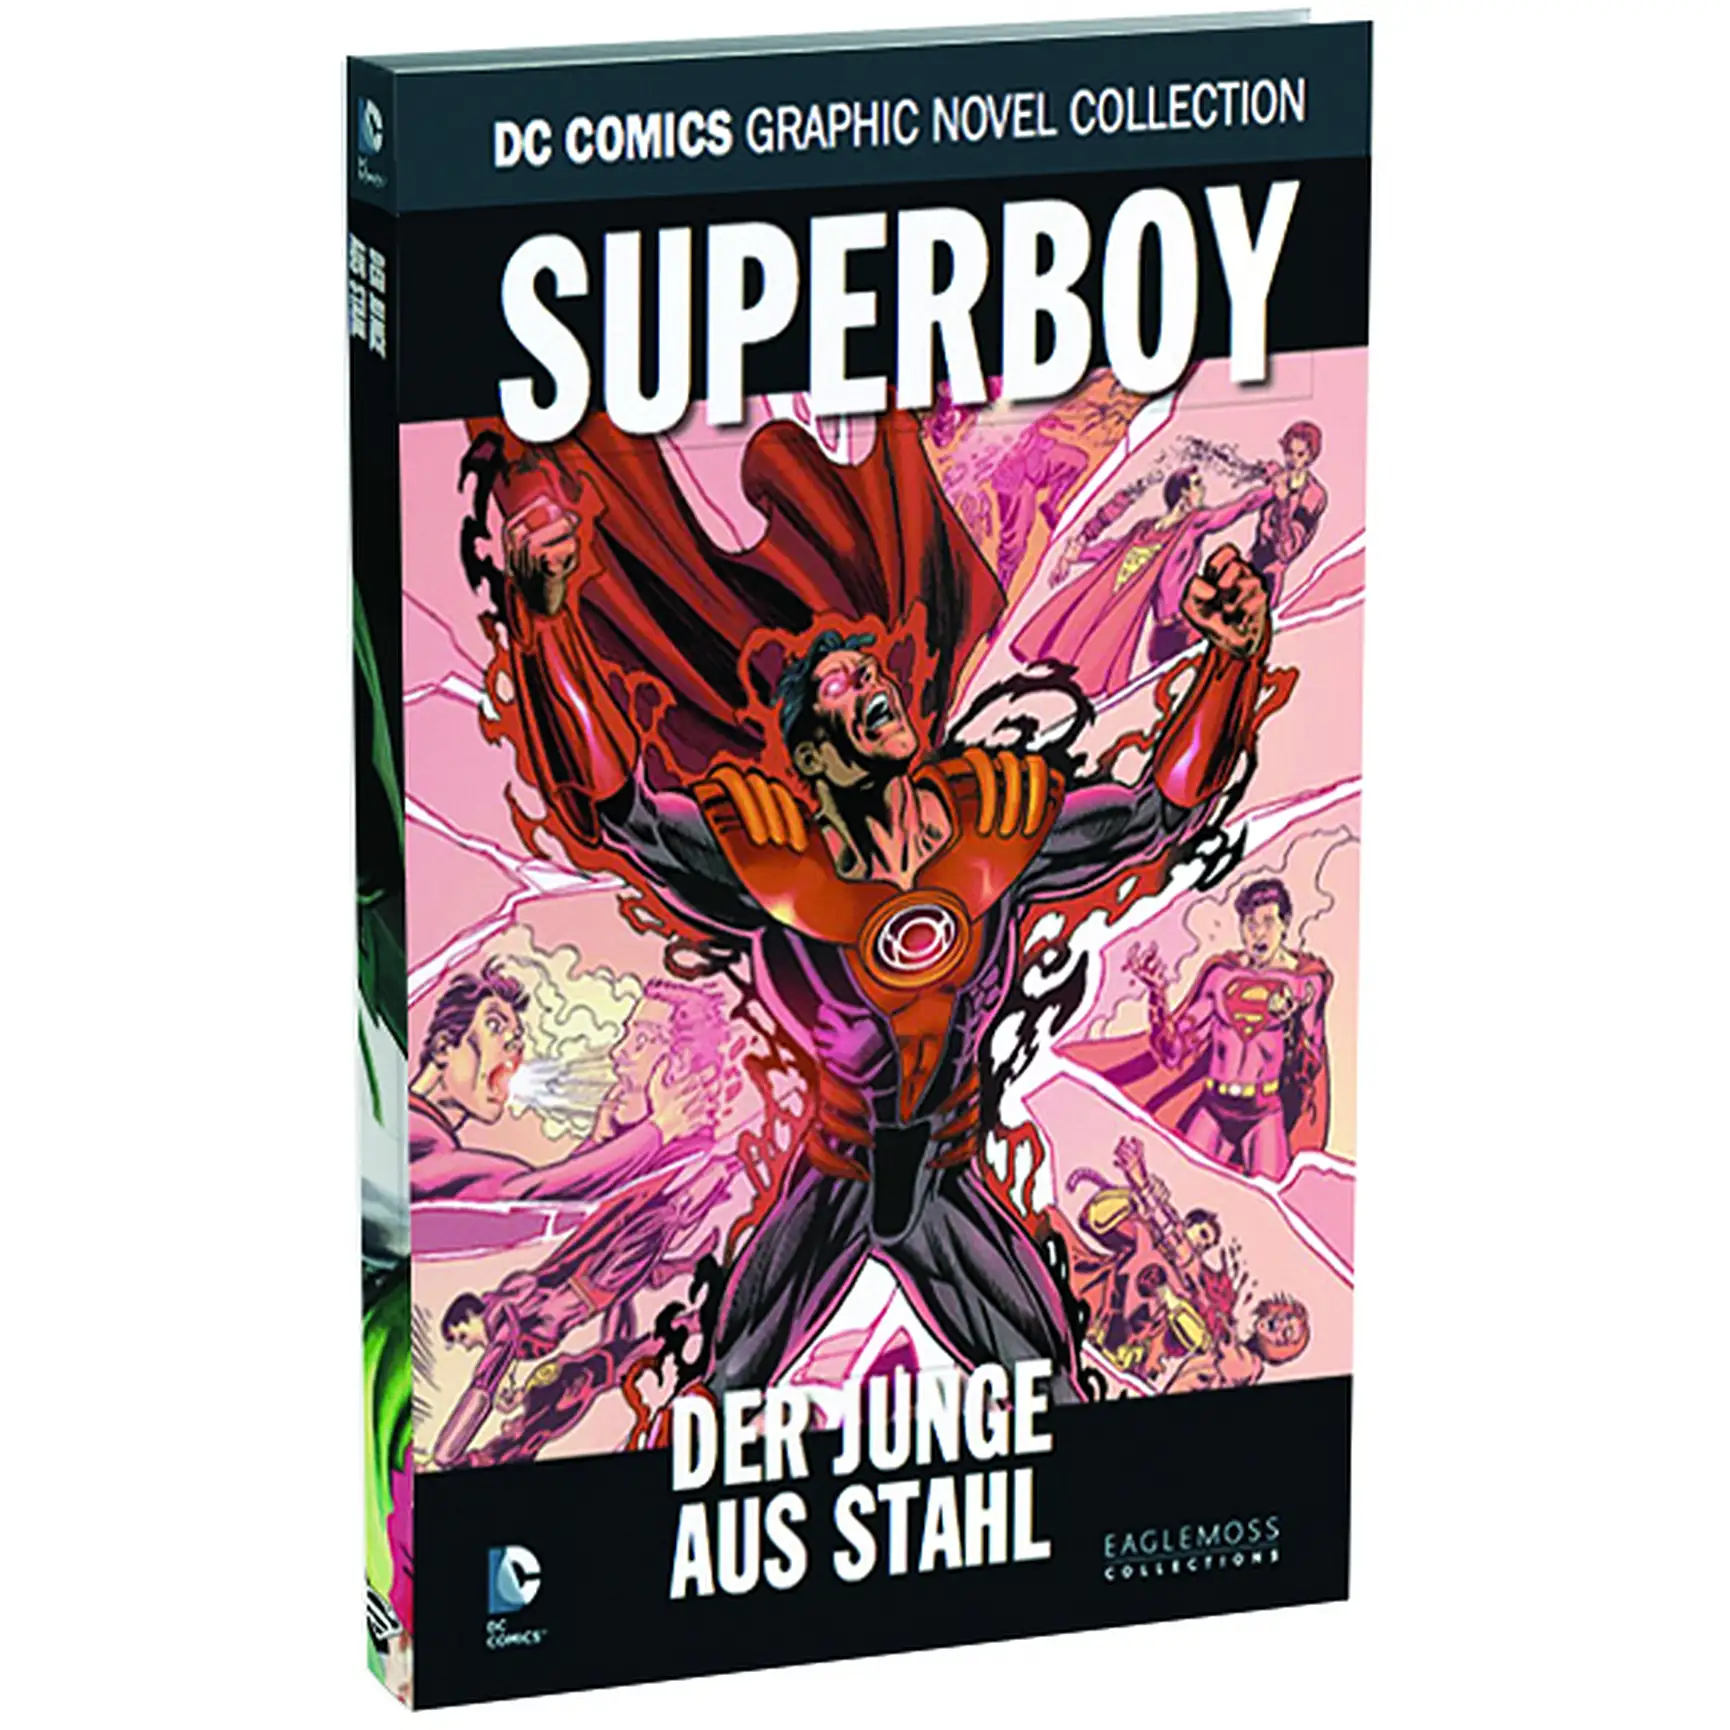 DC Comics Graphic Novel Collection Superboy - Der Junge aus Stahl